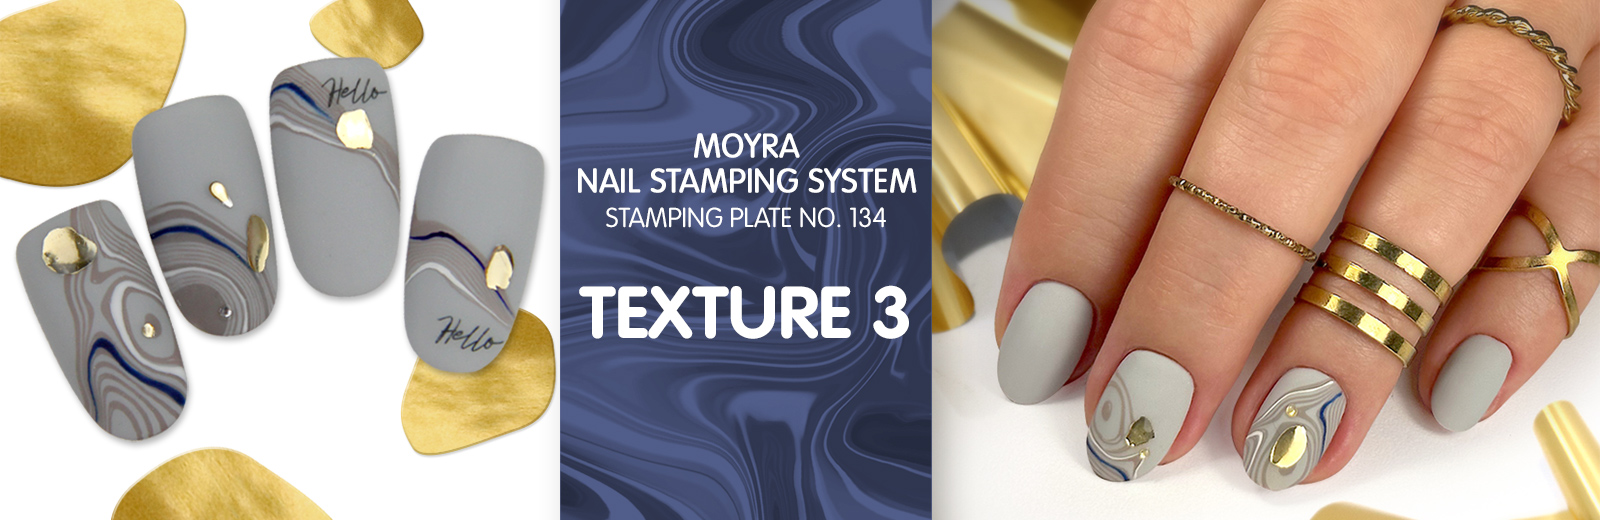 Moyra Stamping plate No. 134 Texture 3